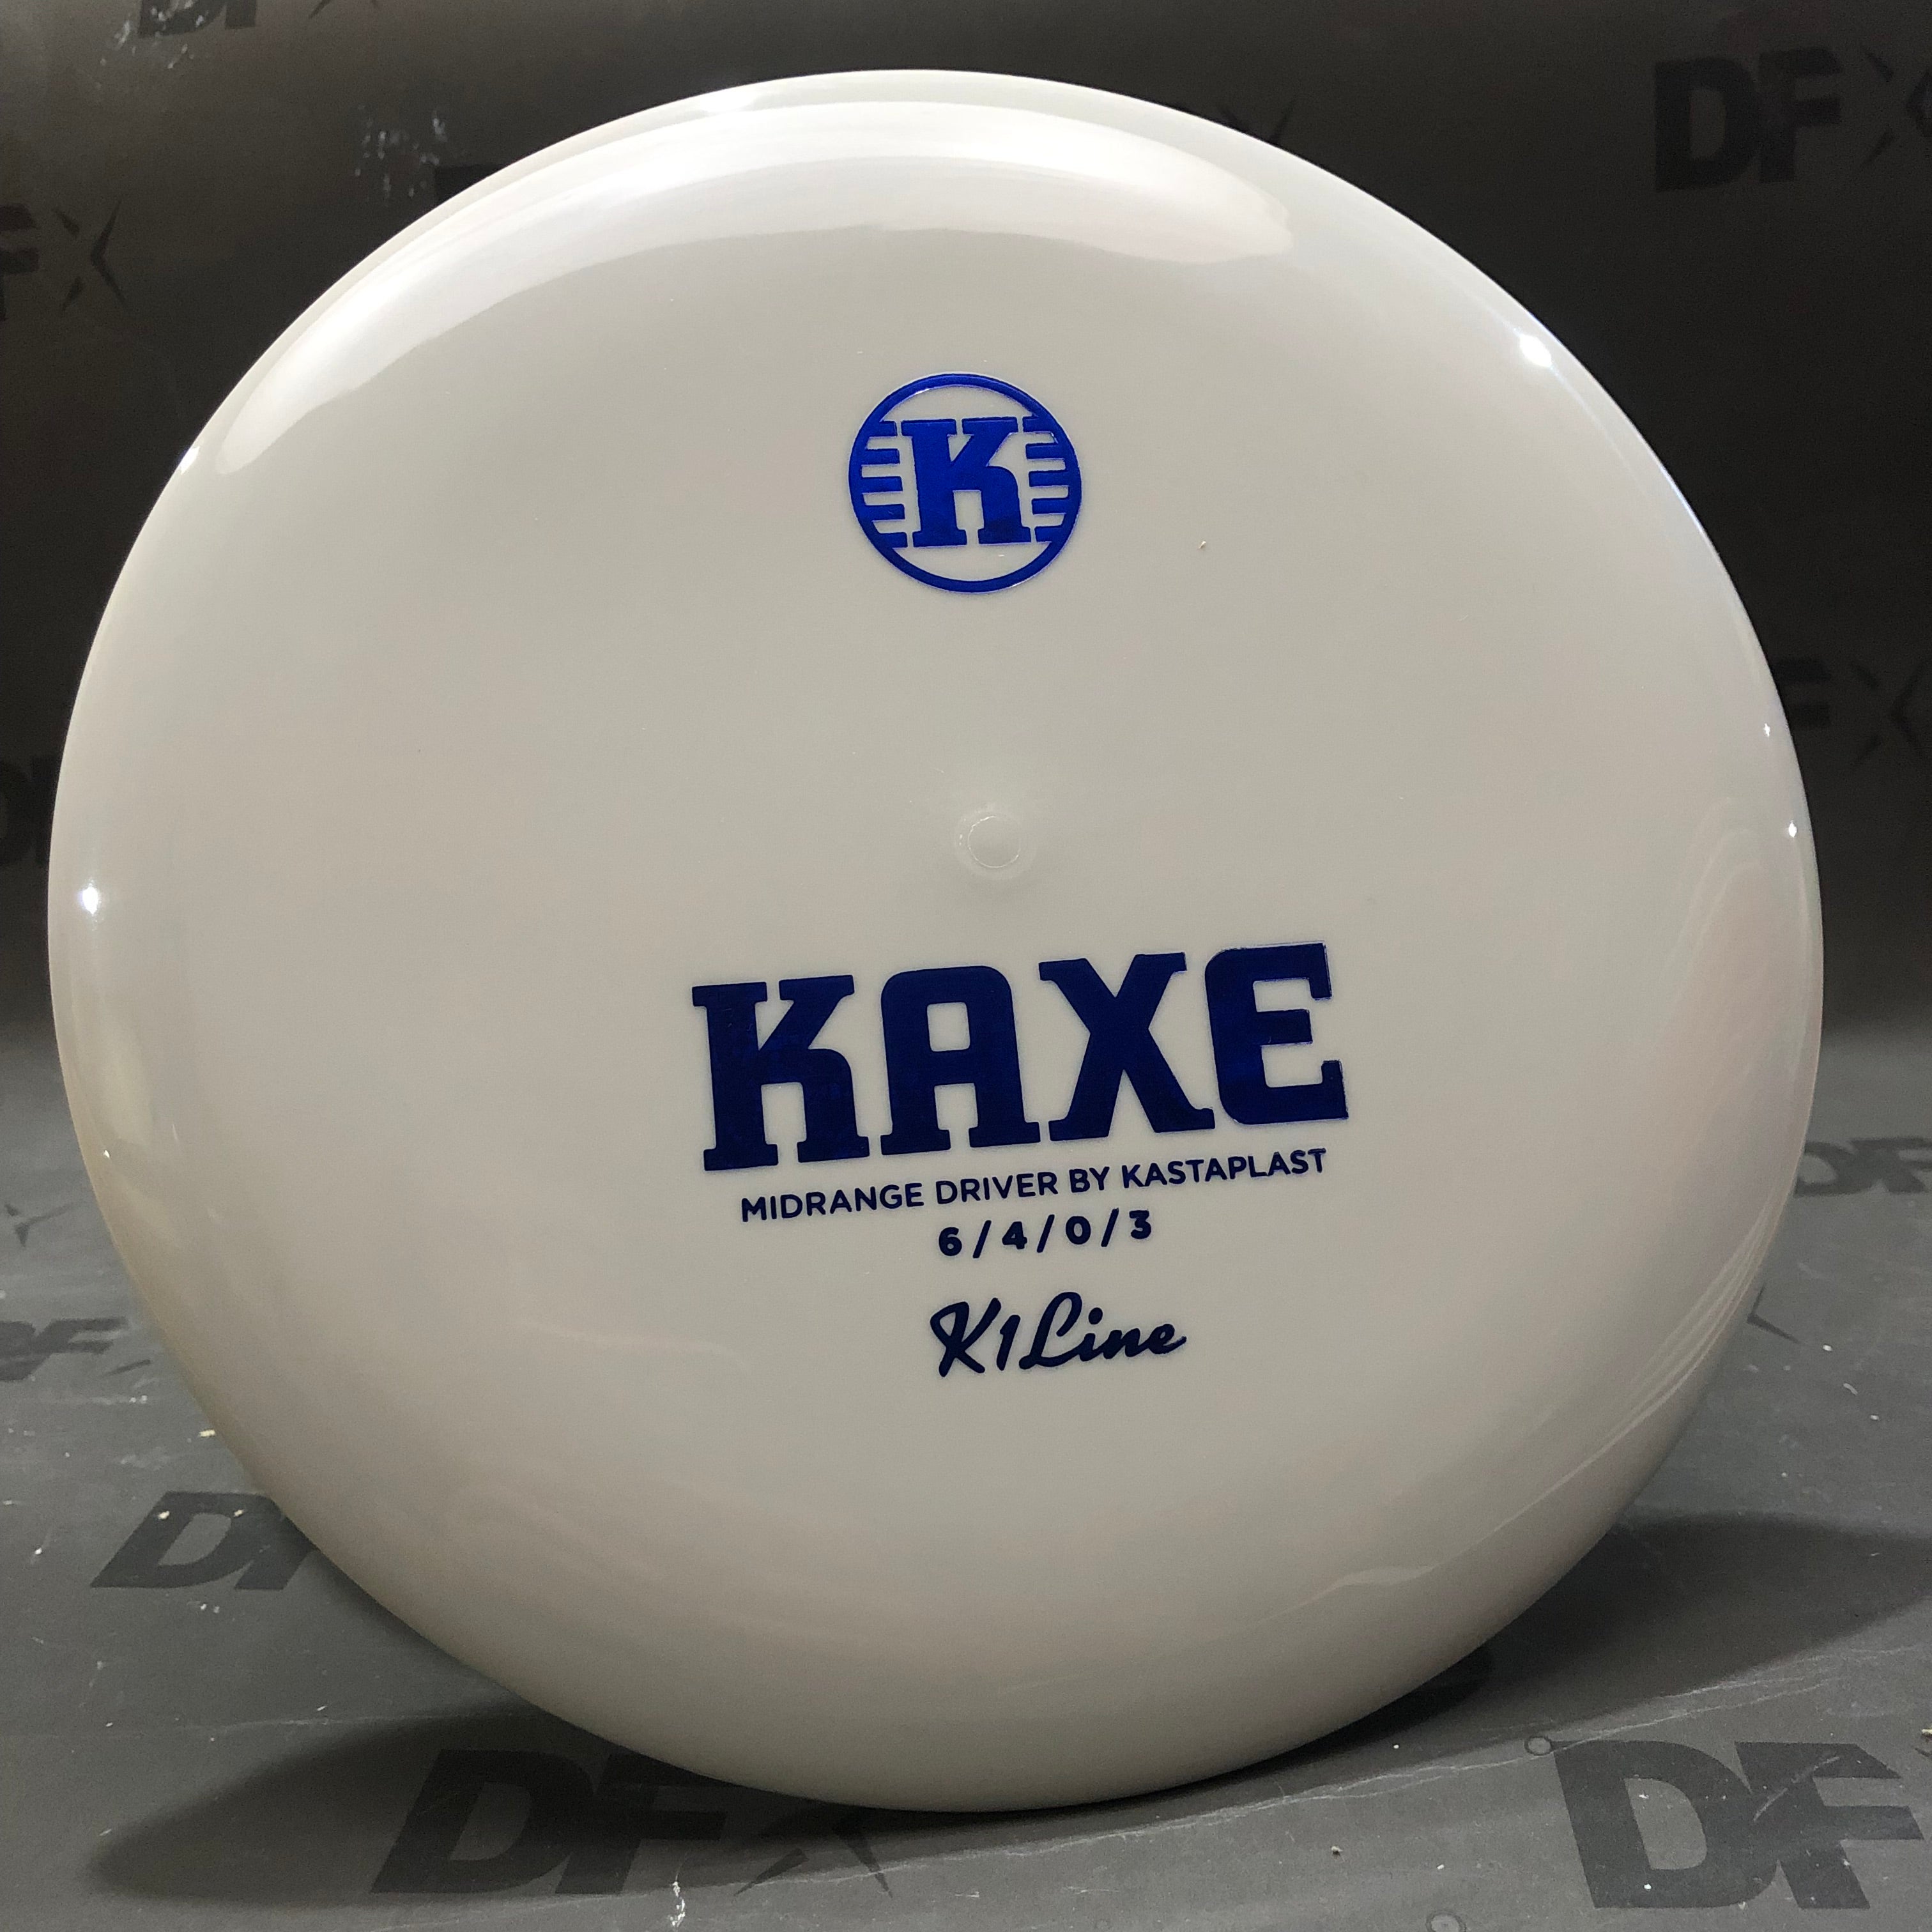 Kastaplast Kaxe - K1